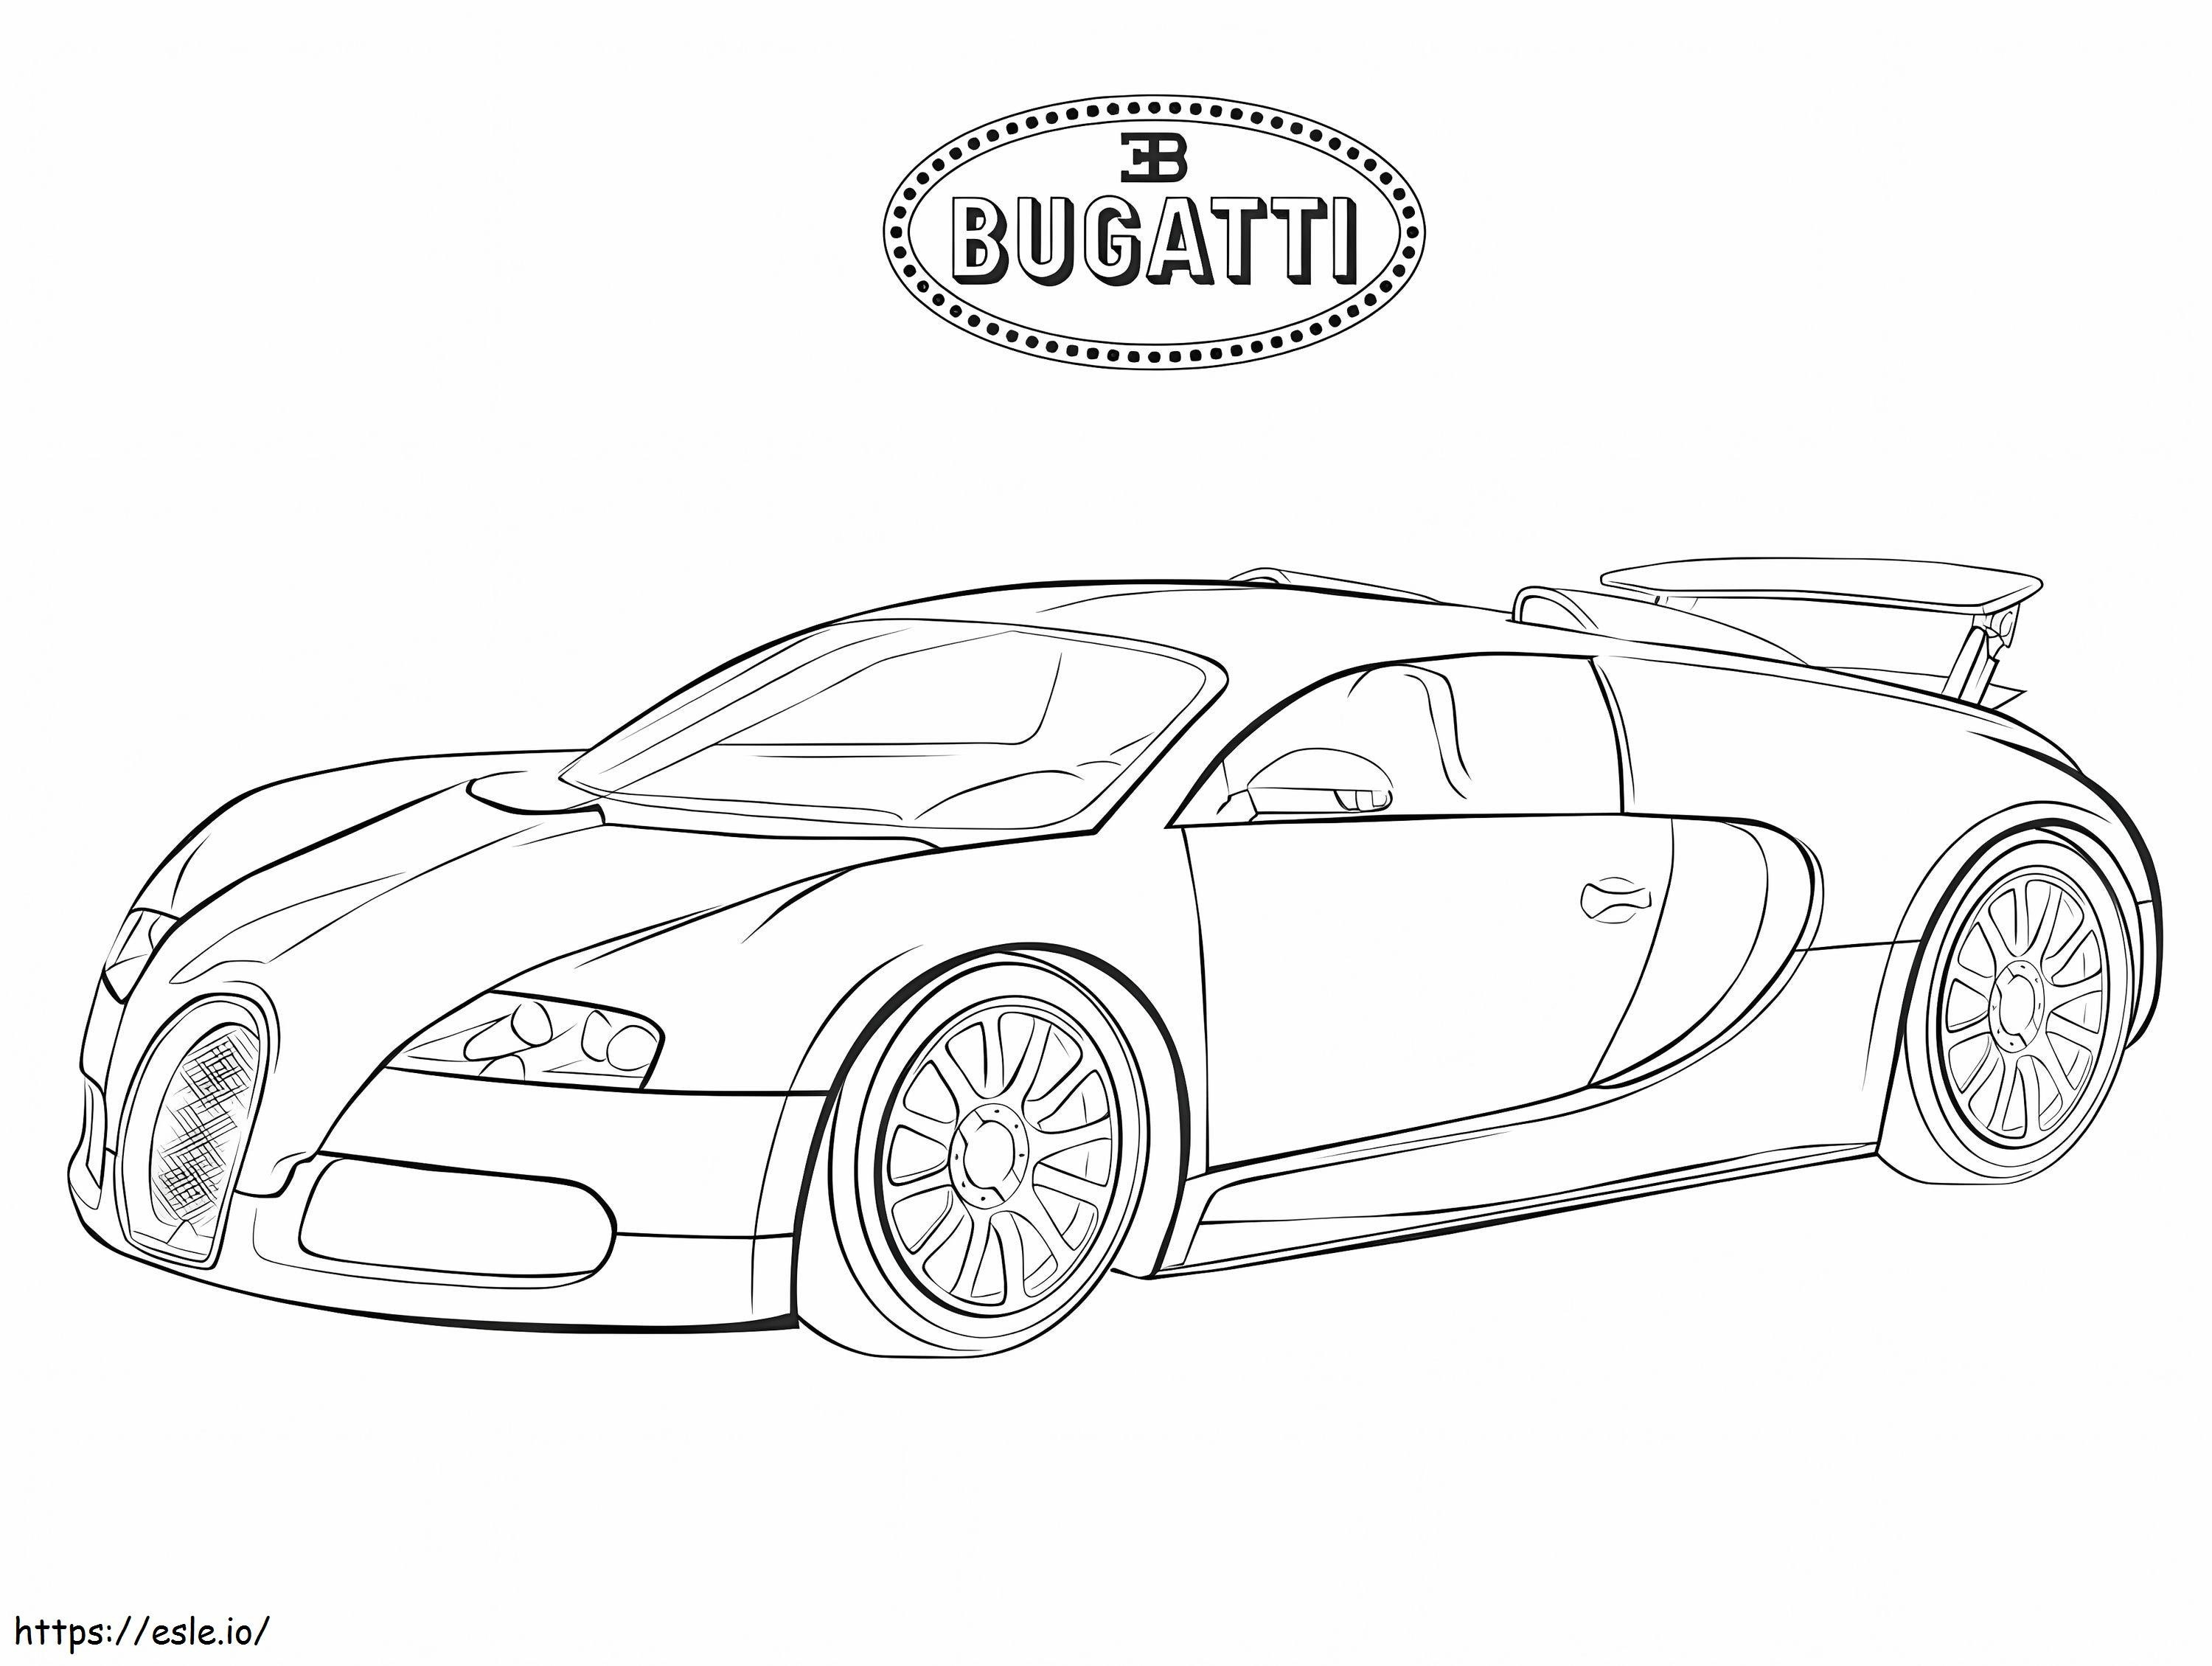 Bugatti6 kleurplaat kleurplaat